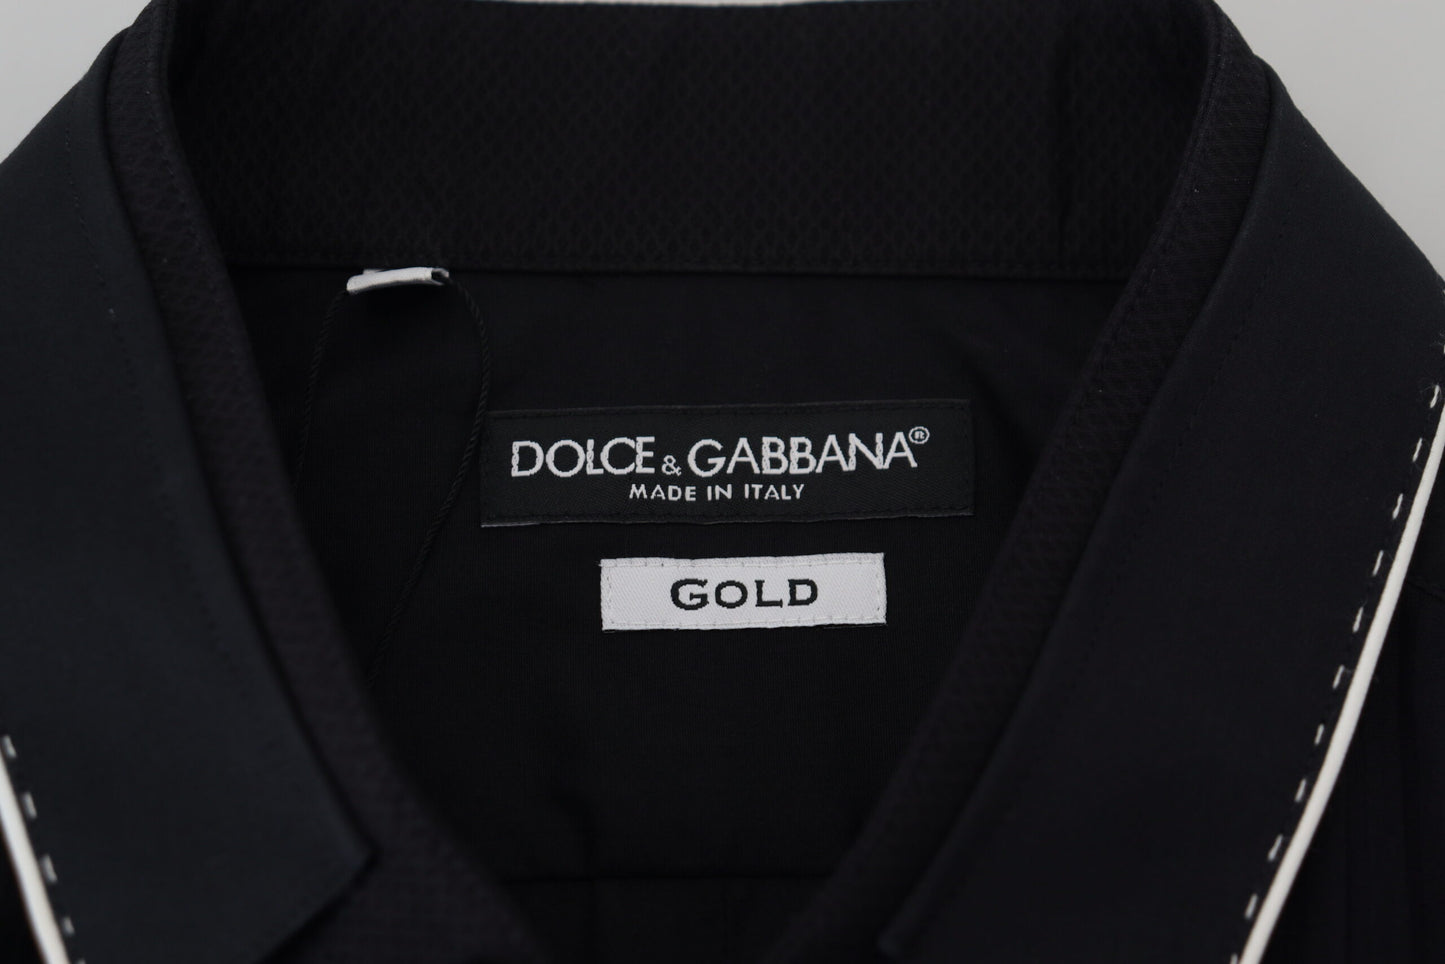 Dolce & Gabbana Elegant Slim Fit Tuxedo Dress Shirt